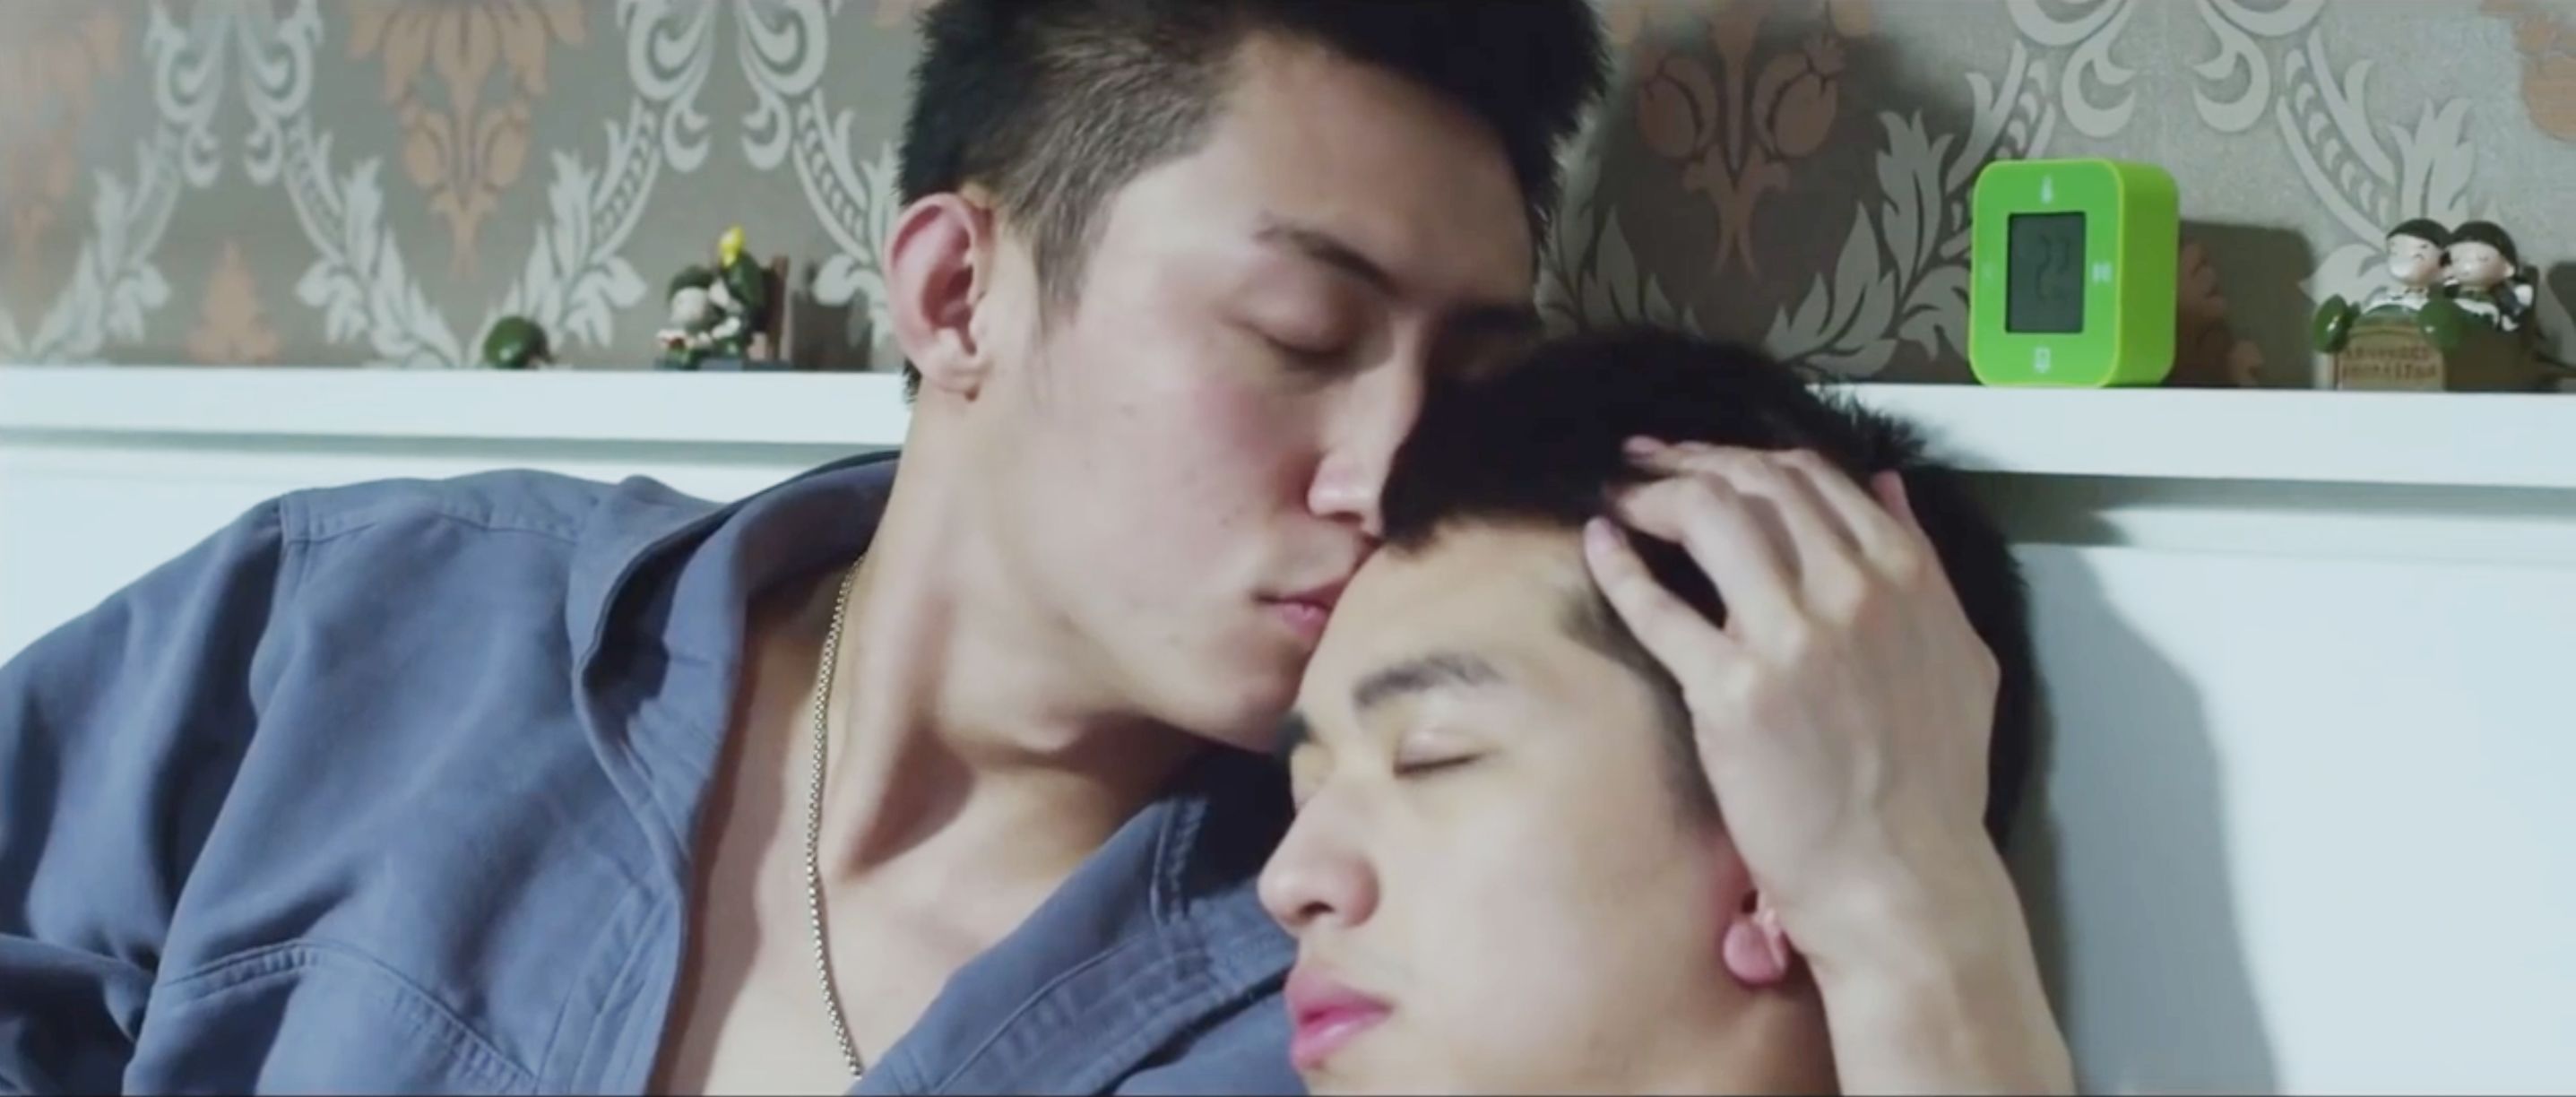 Hd Rep China Sex - China bans same-sex romance from TV screens | CNN